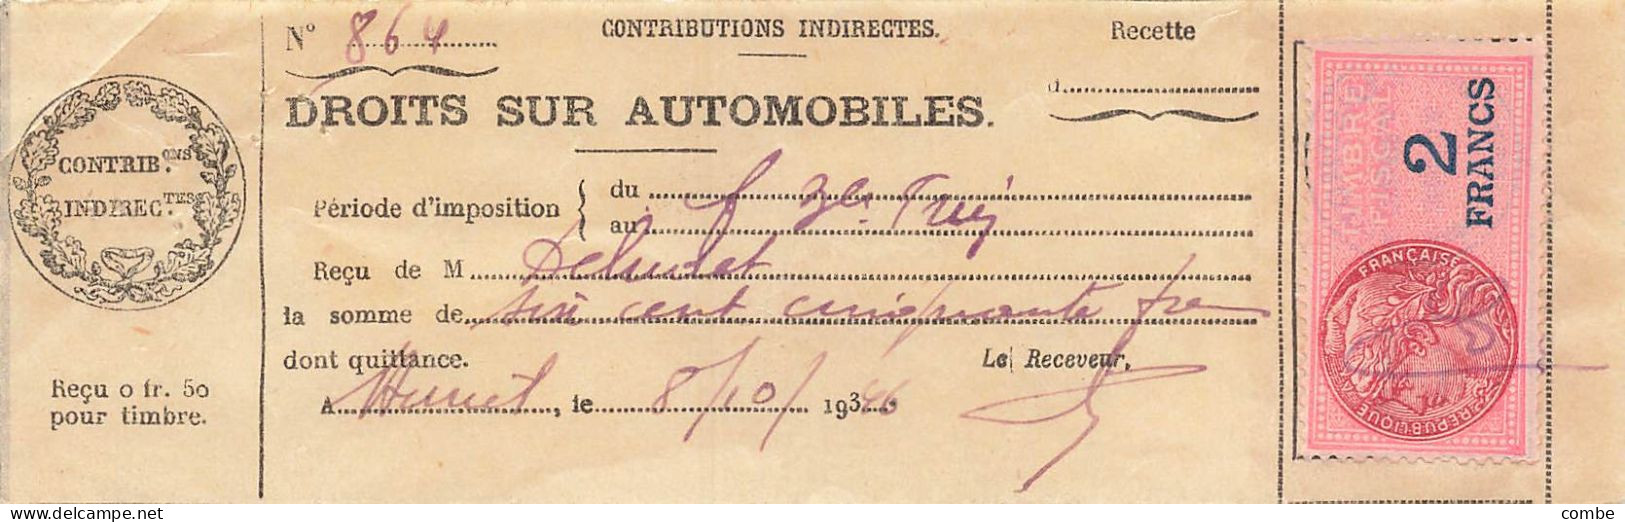 DROITS SUR AUTOMOBILES. VAILLY, AUXERRE. 1931,36,37 - Historical Documents